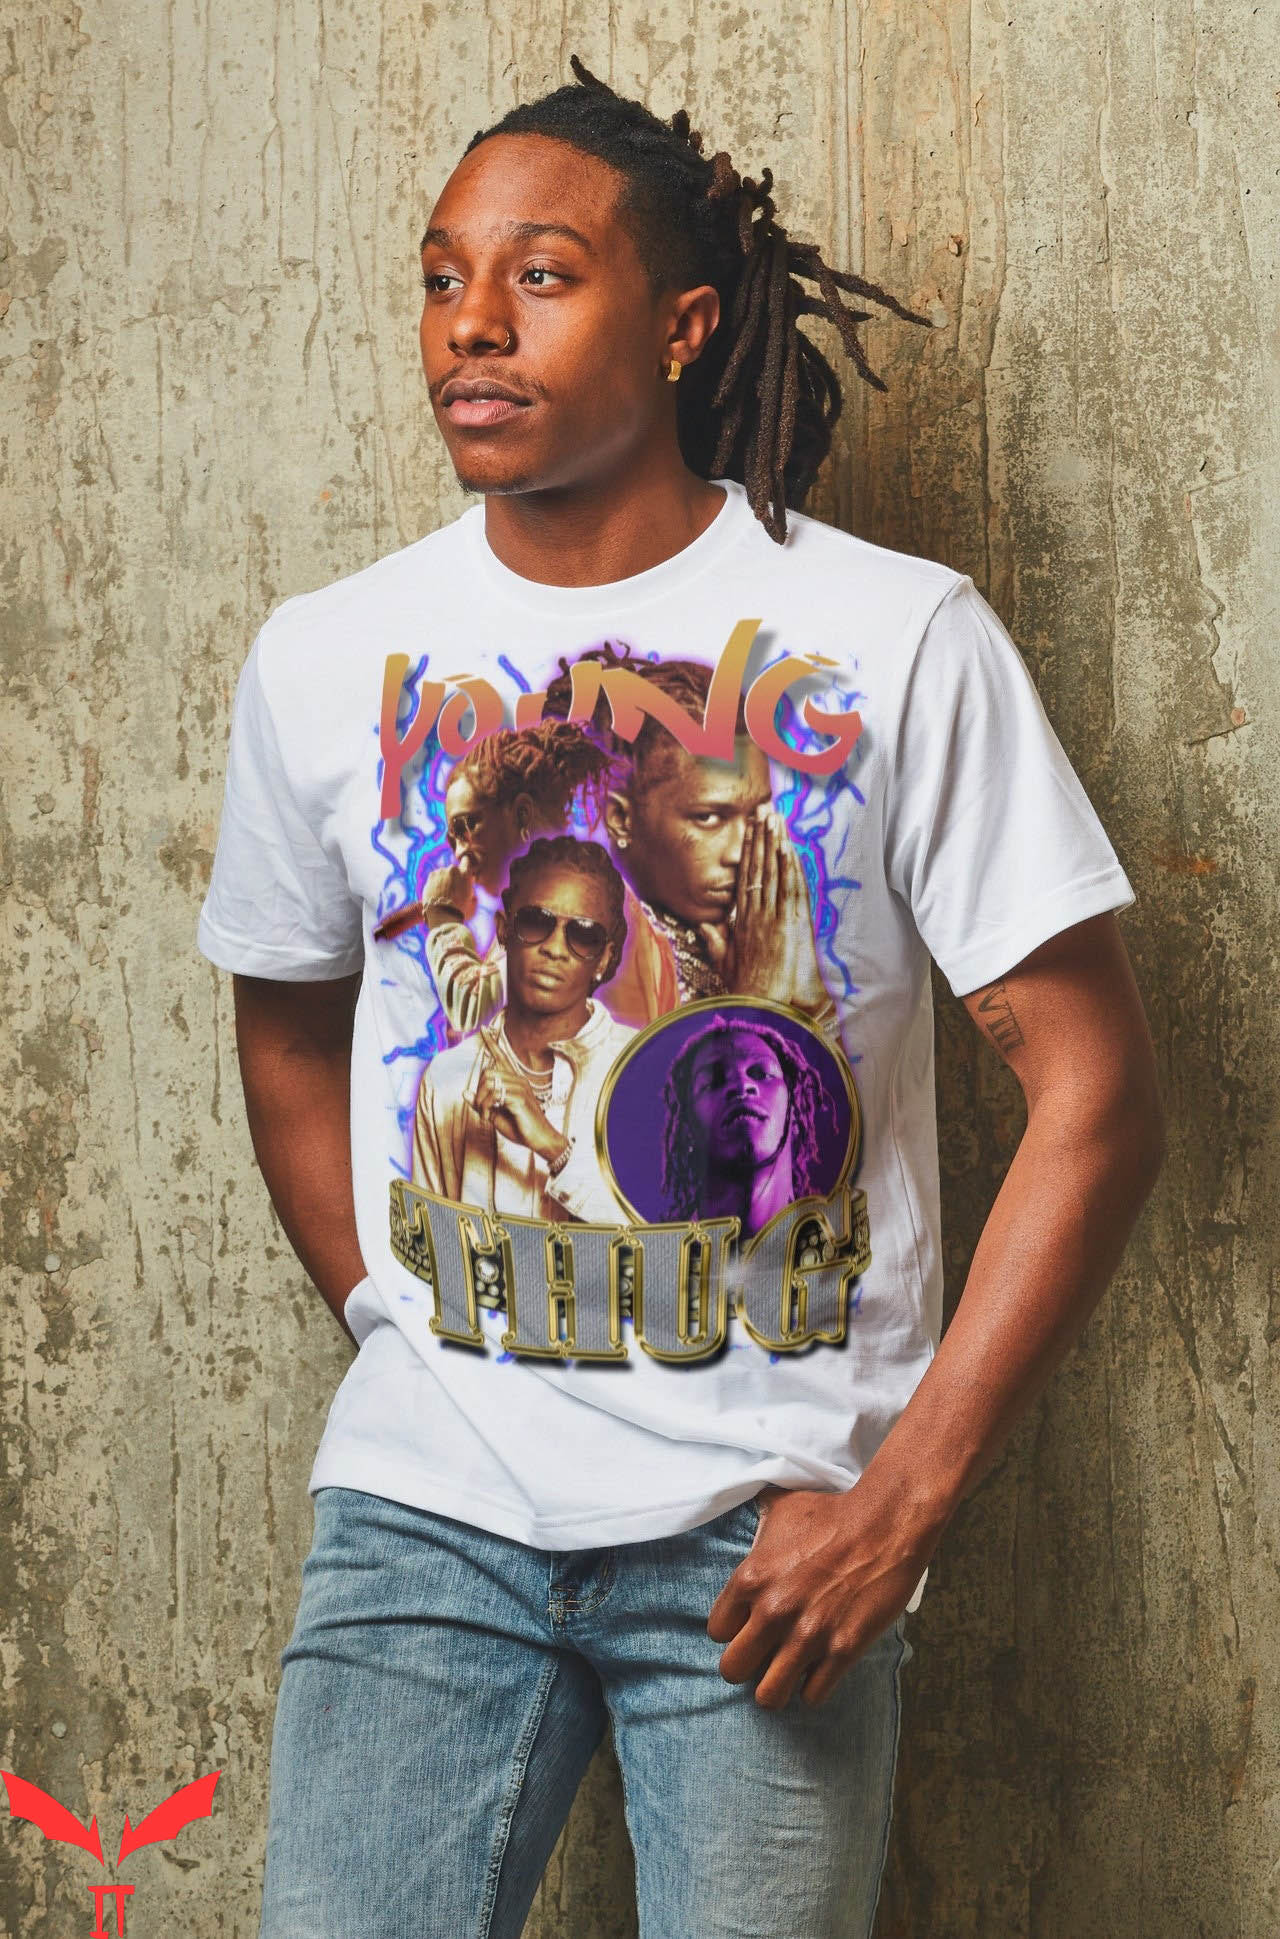 Free YSL T-Shirt Young Thug Gunna Hip Hop Vintage Retro 90s